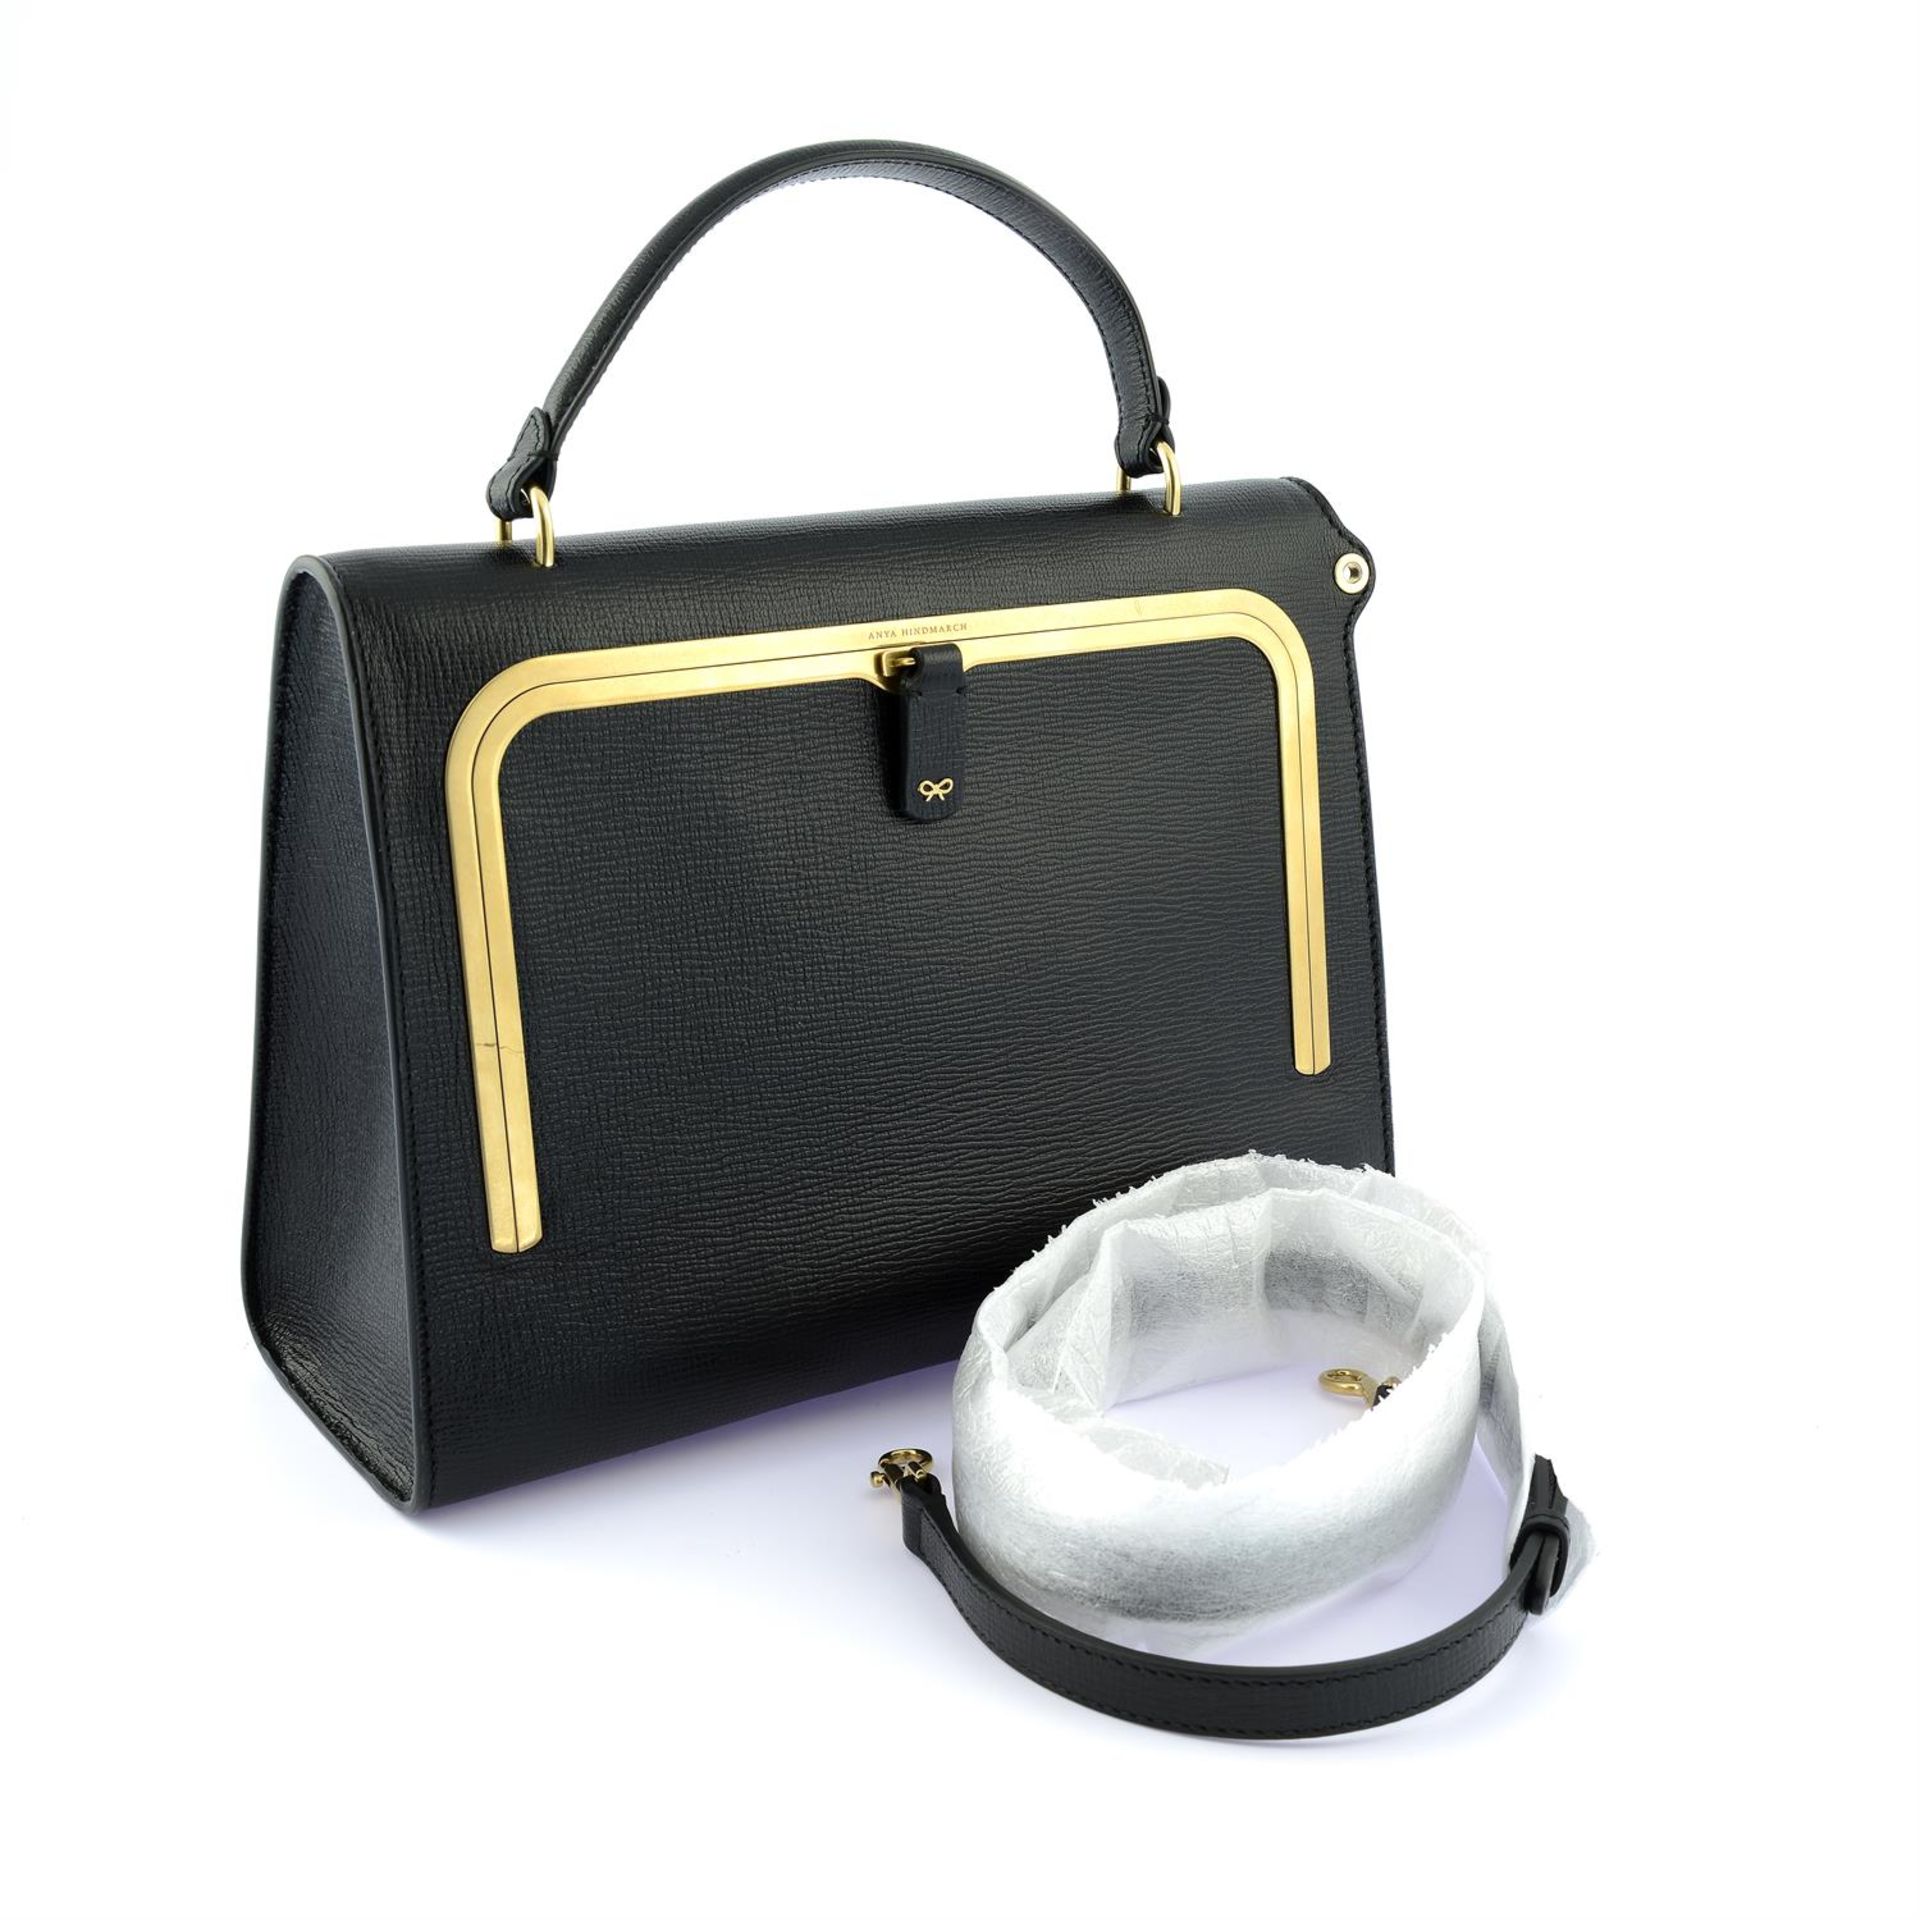 ANYA HINDMARCH - a black leather handbag. - Bild 5 aus 5